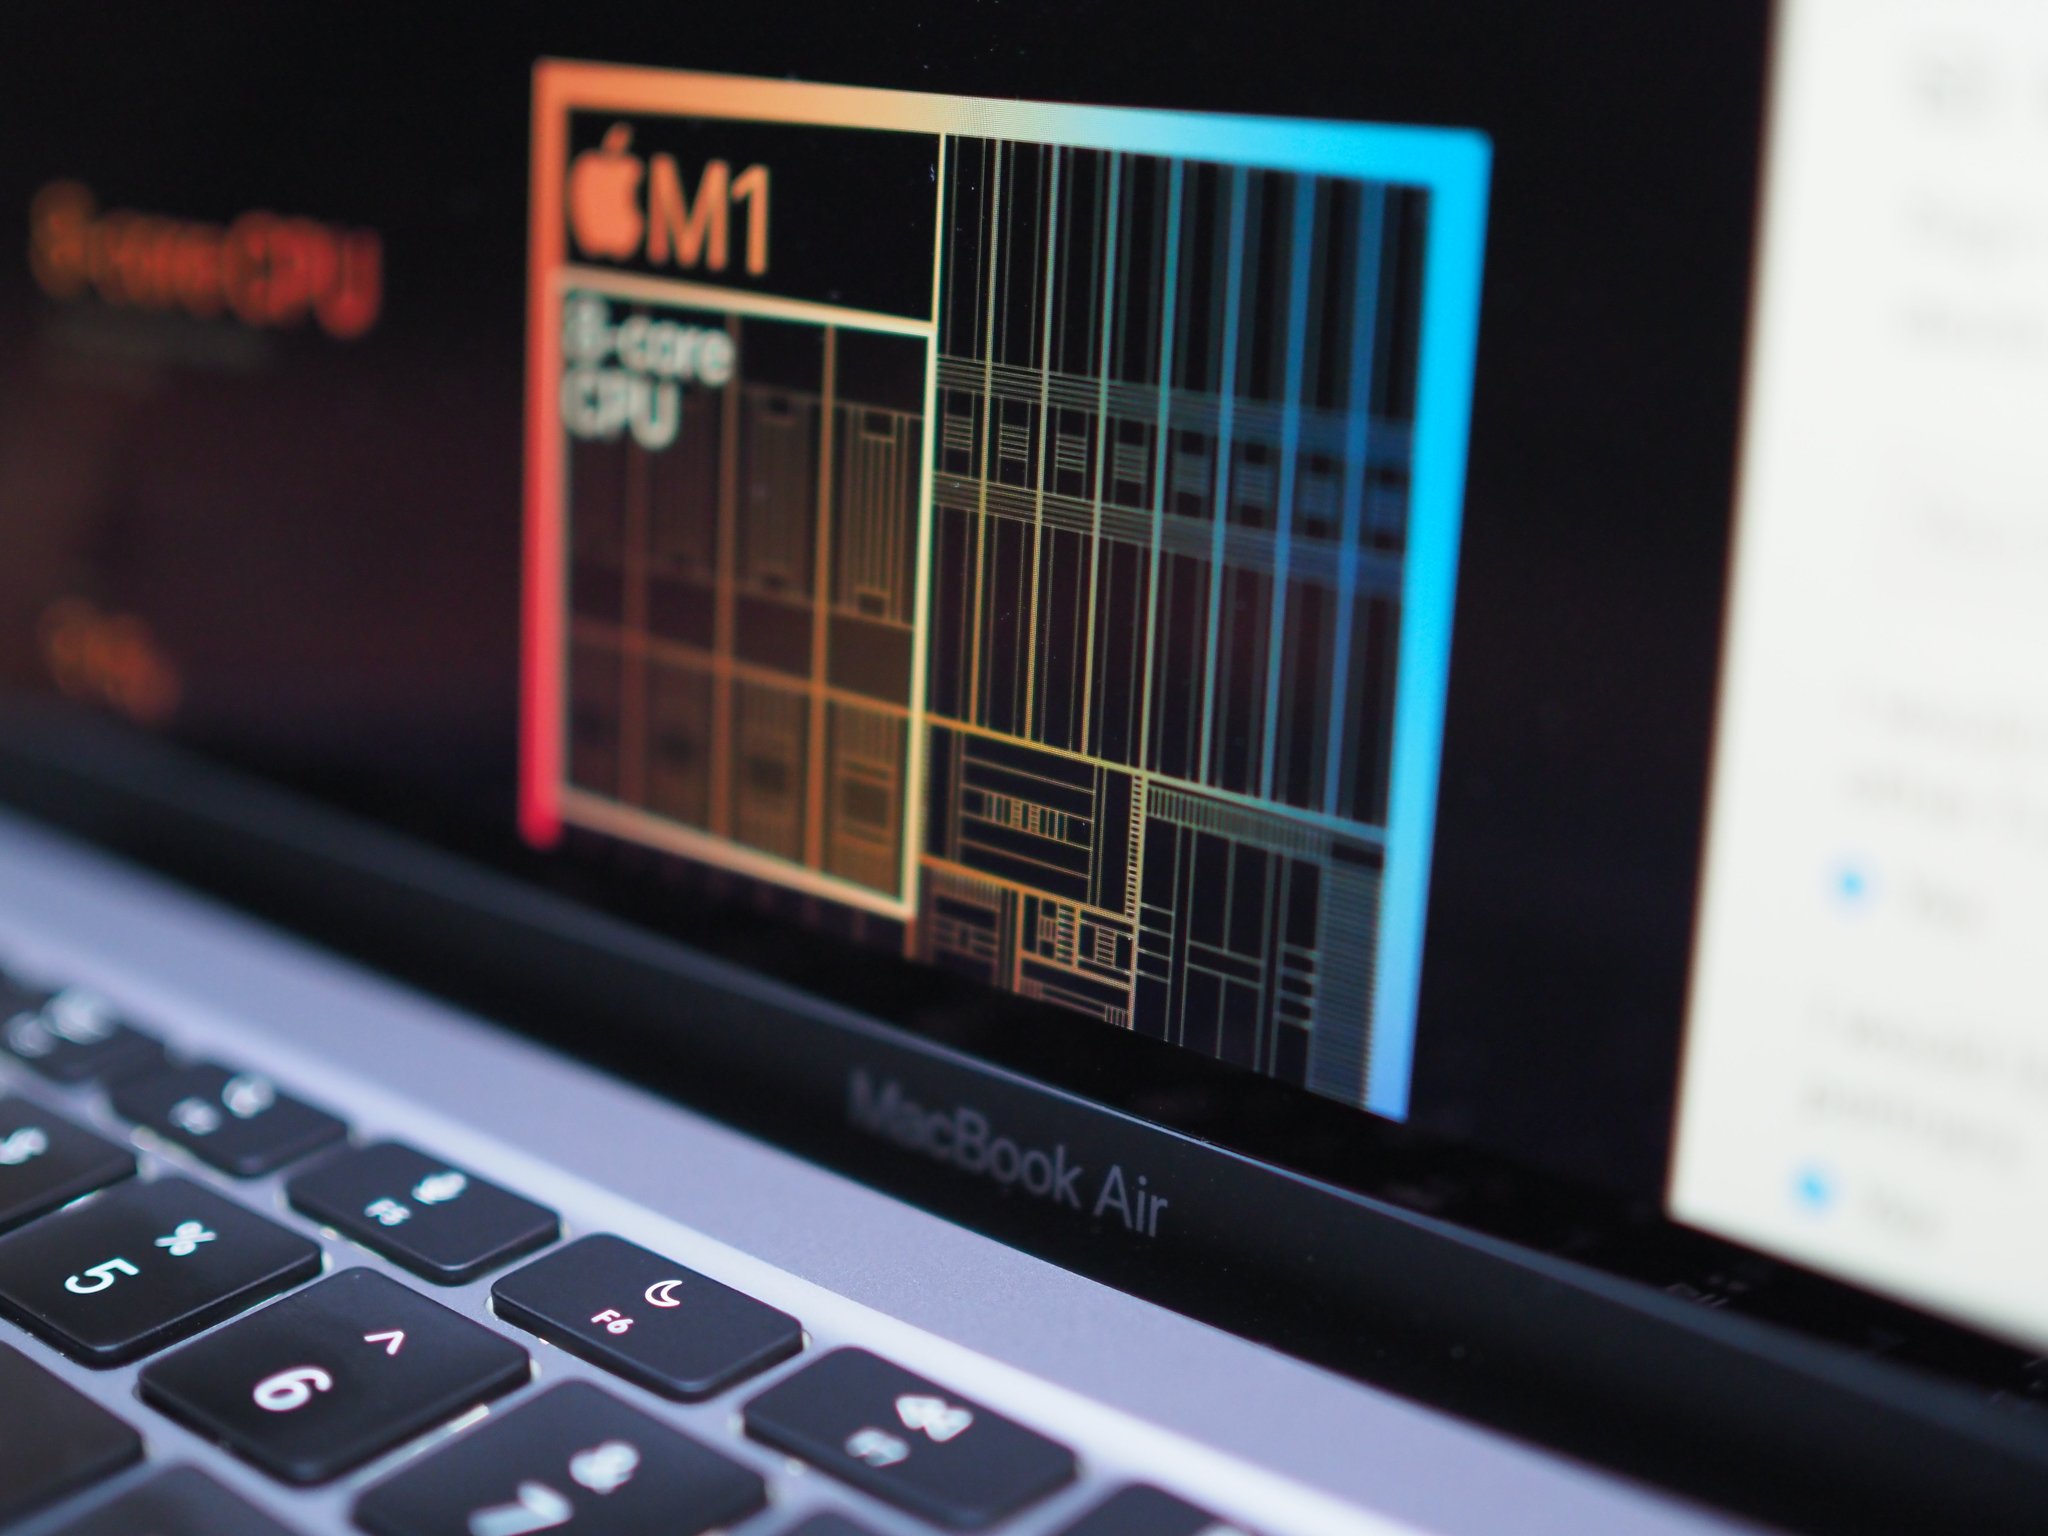 app brings fan noise back to super-quiet M1 Mac | iMore